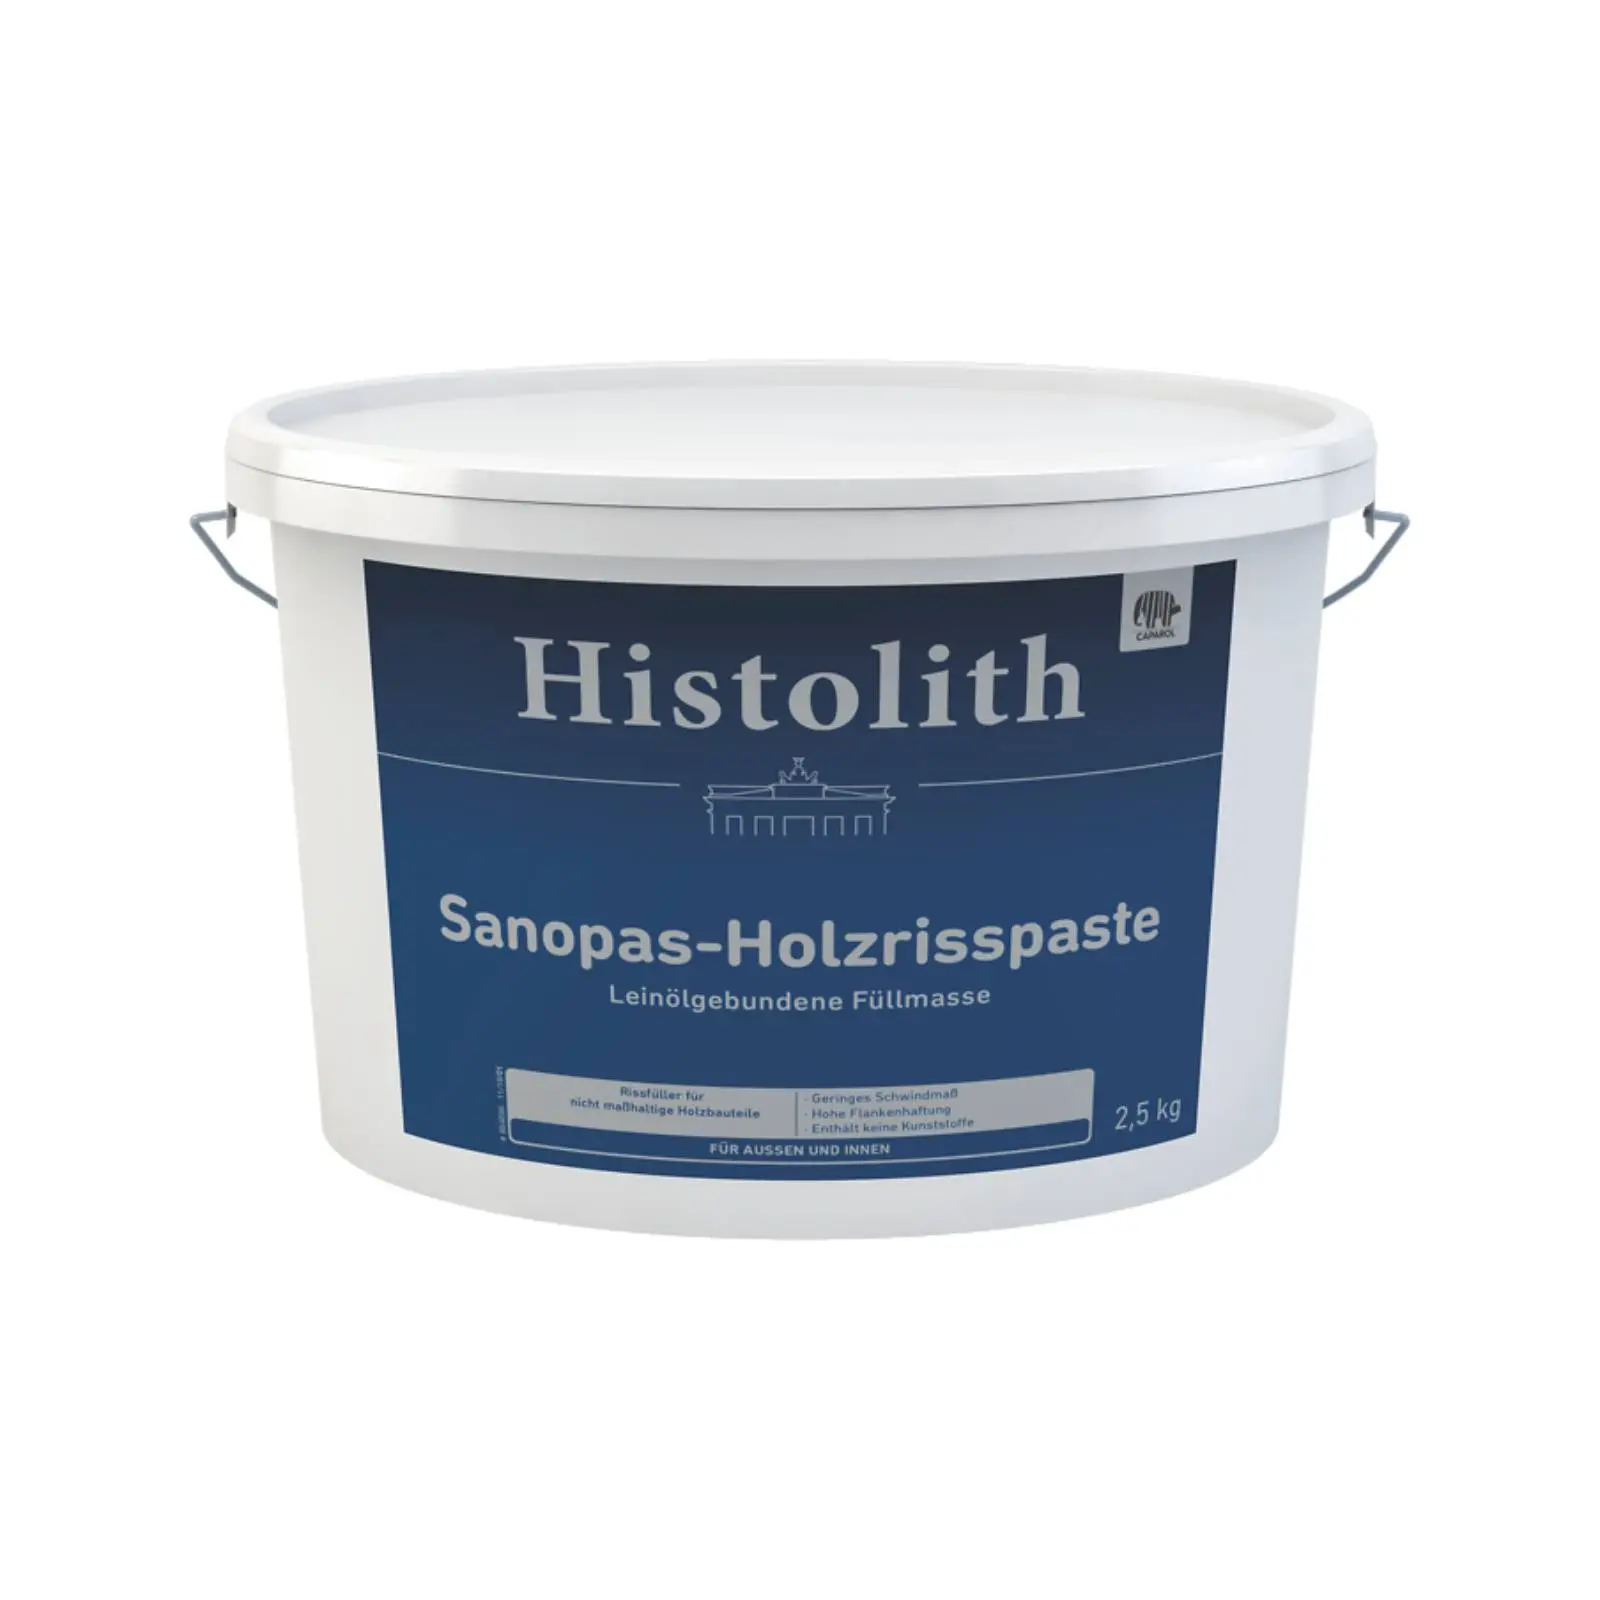 Caparol Histolith Sanopas-Holzrisspaste